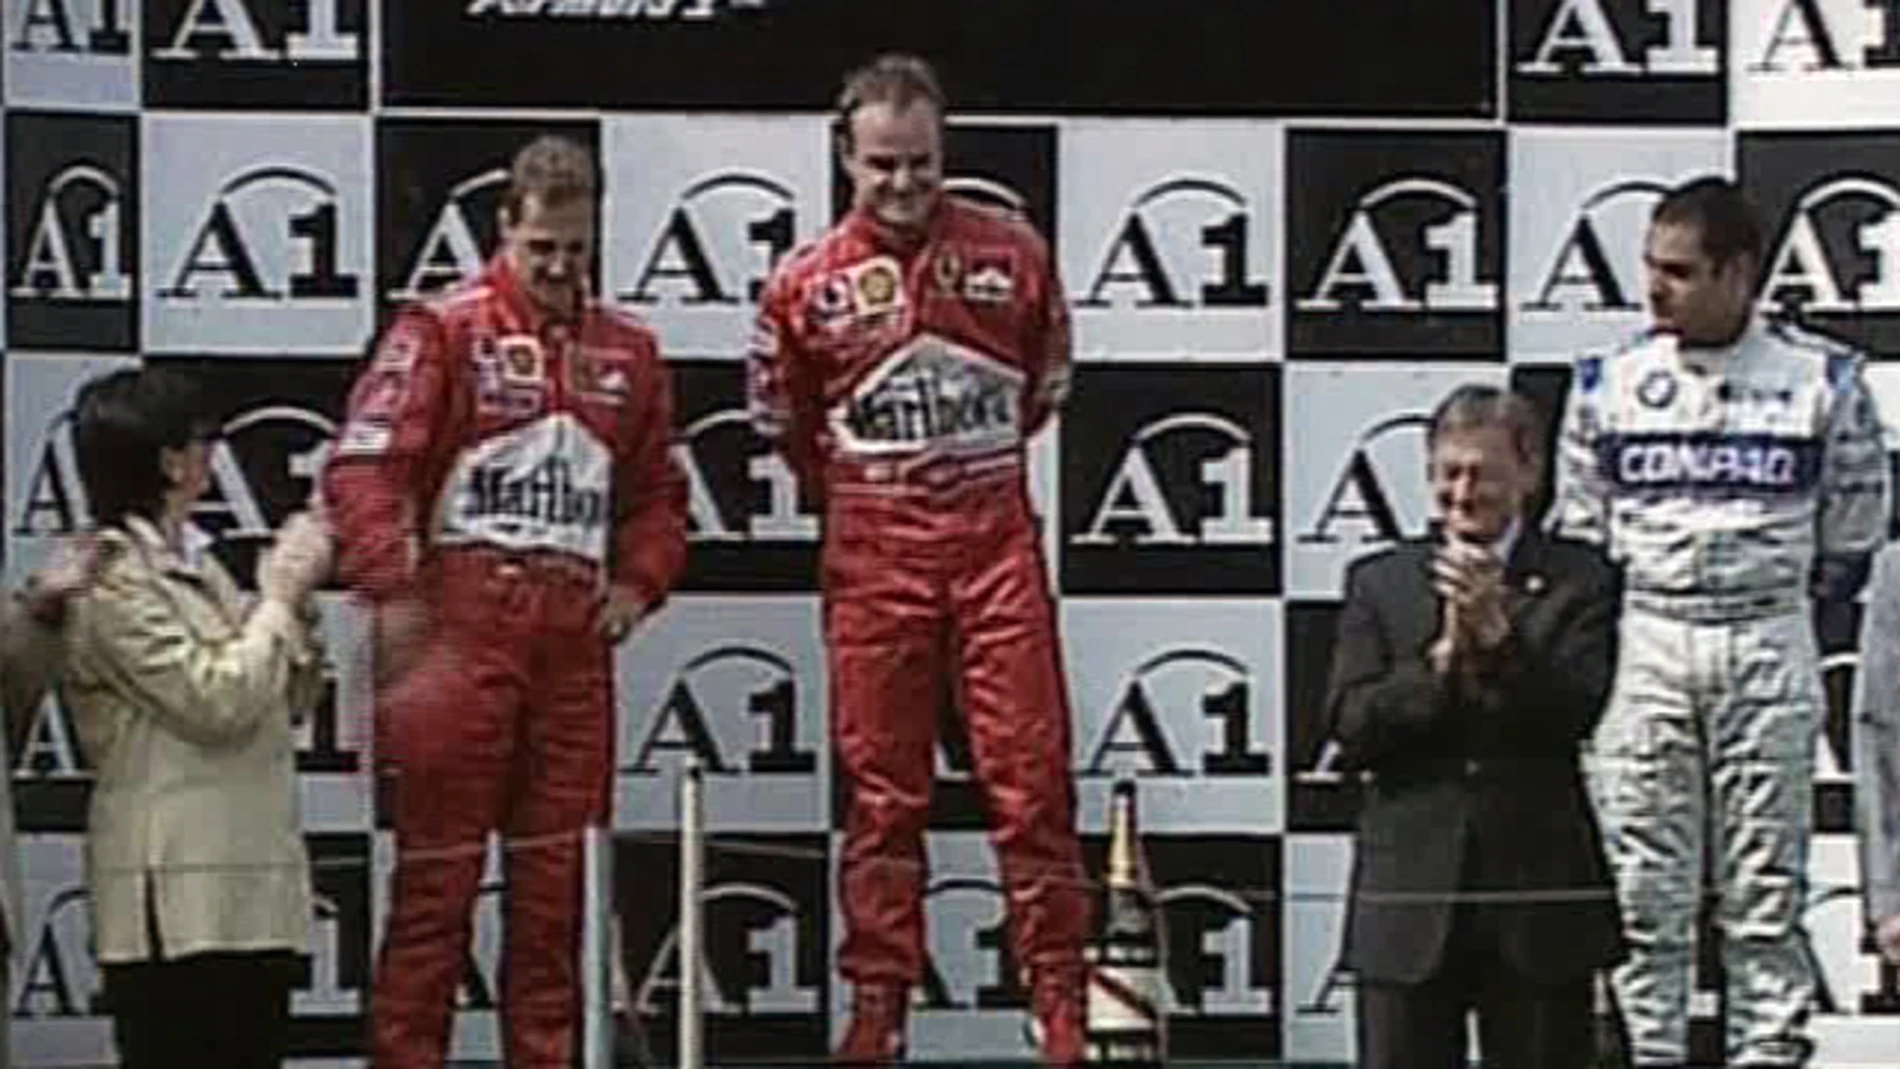 El podio de Austria 2002